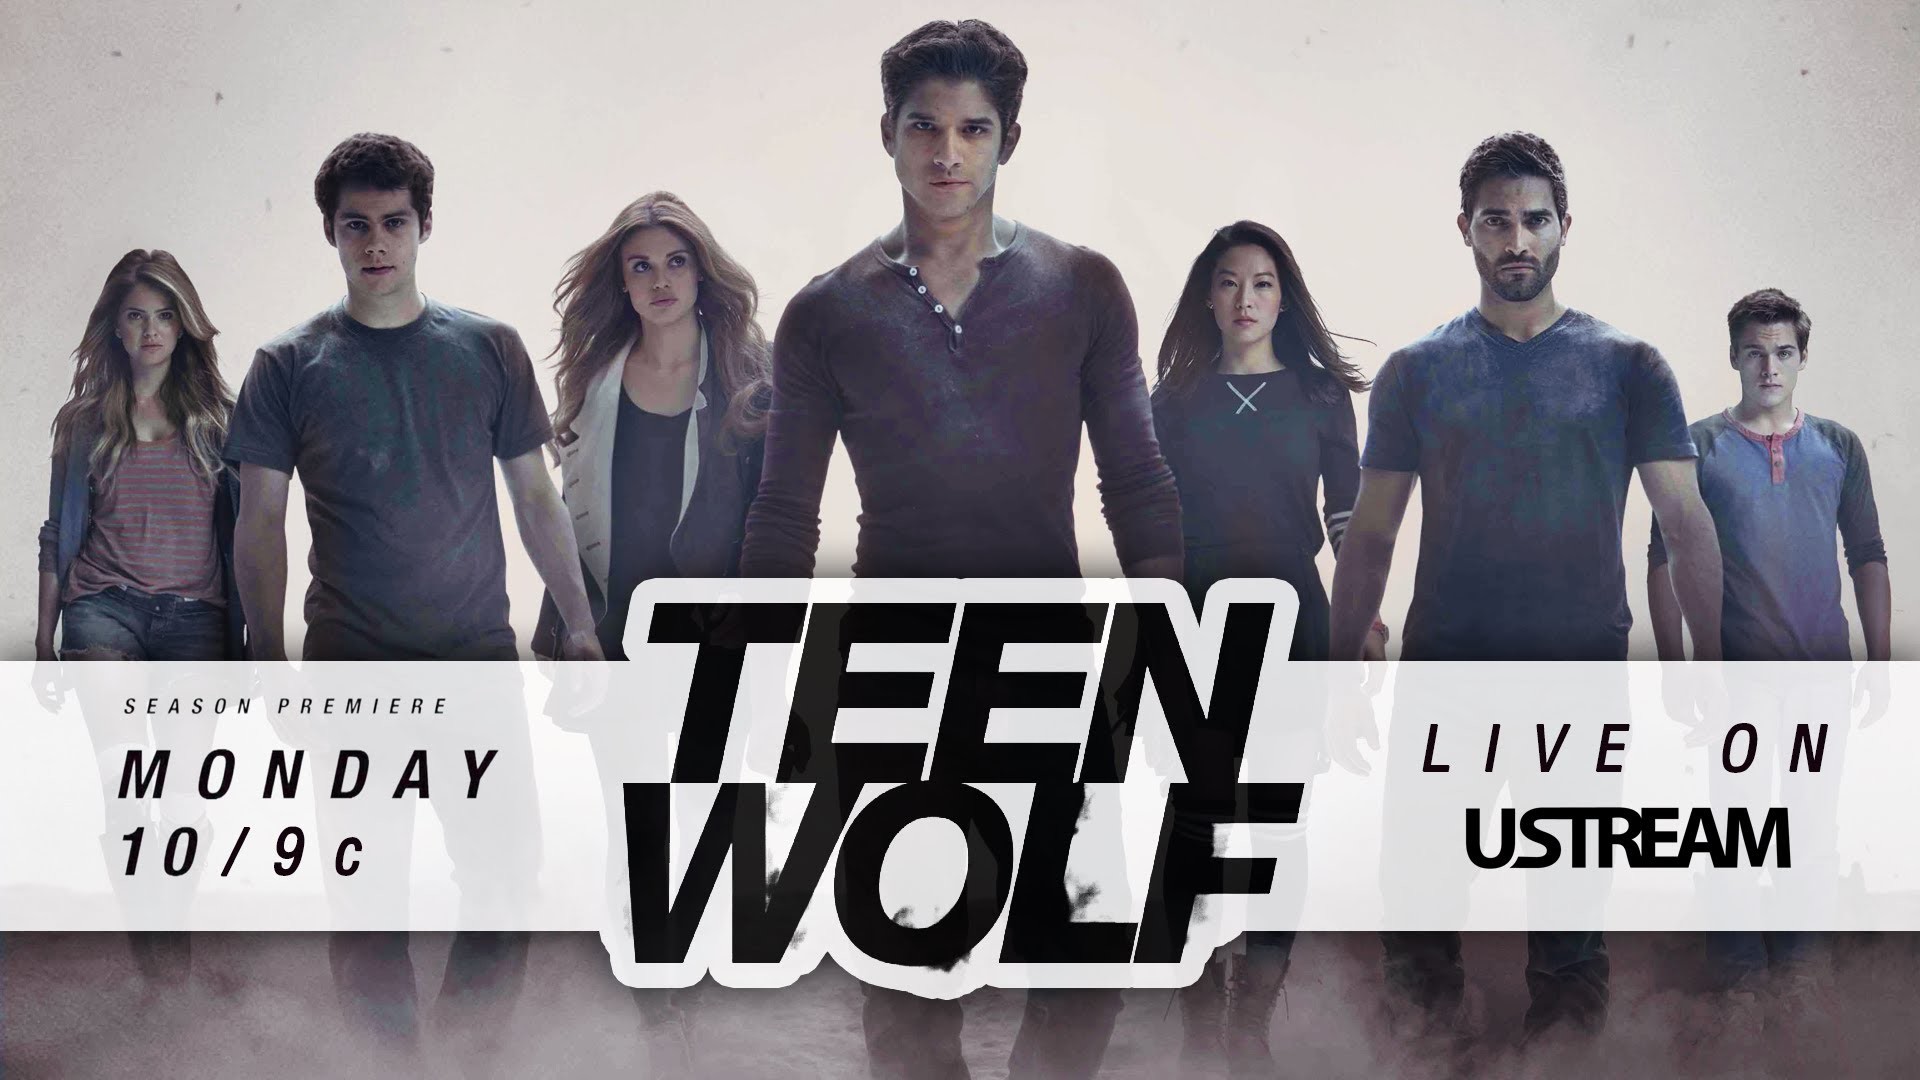 1920x1080 ... Teen Wolf Season 6 Character Posters - YouTube Teen wolf wallpaper ...